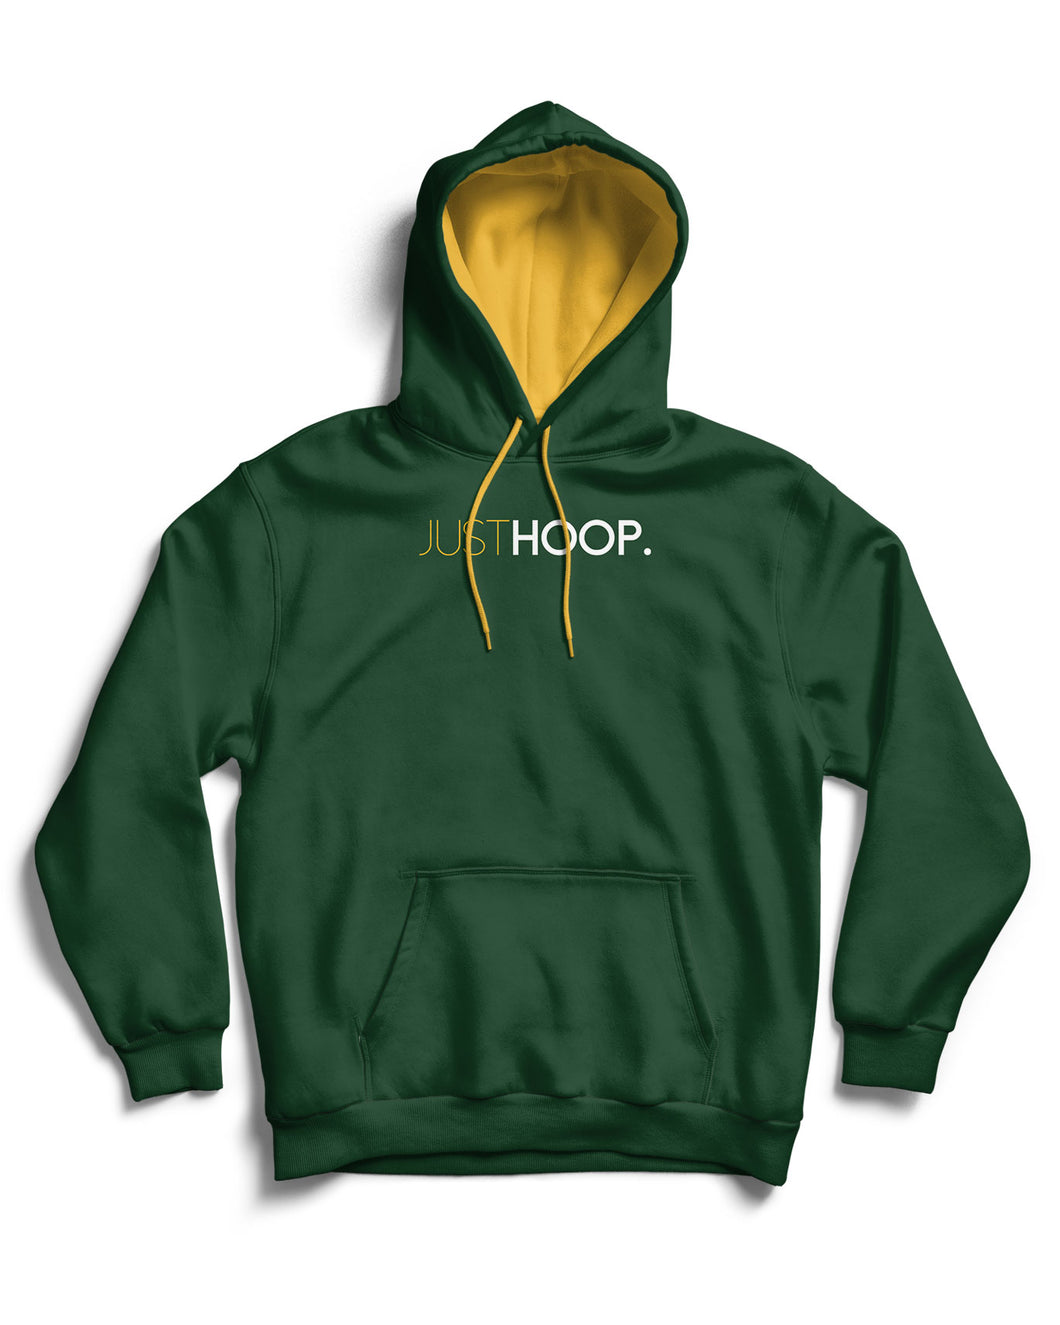 Just Hoop Forest Green Pullover Hoodie